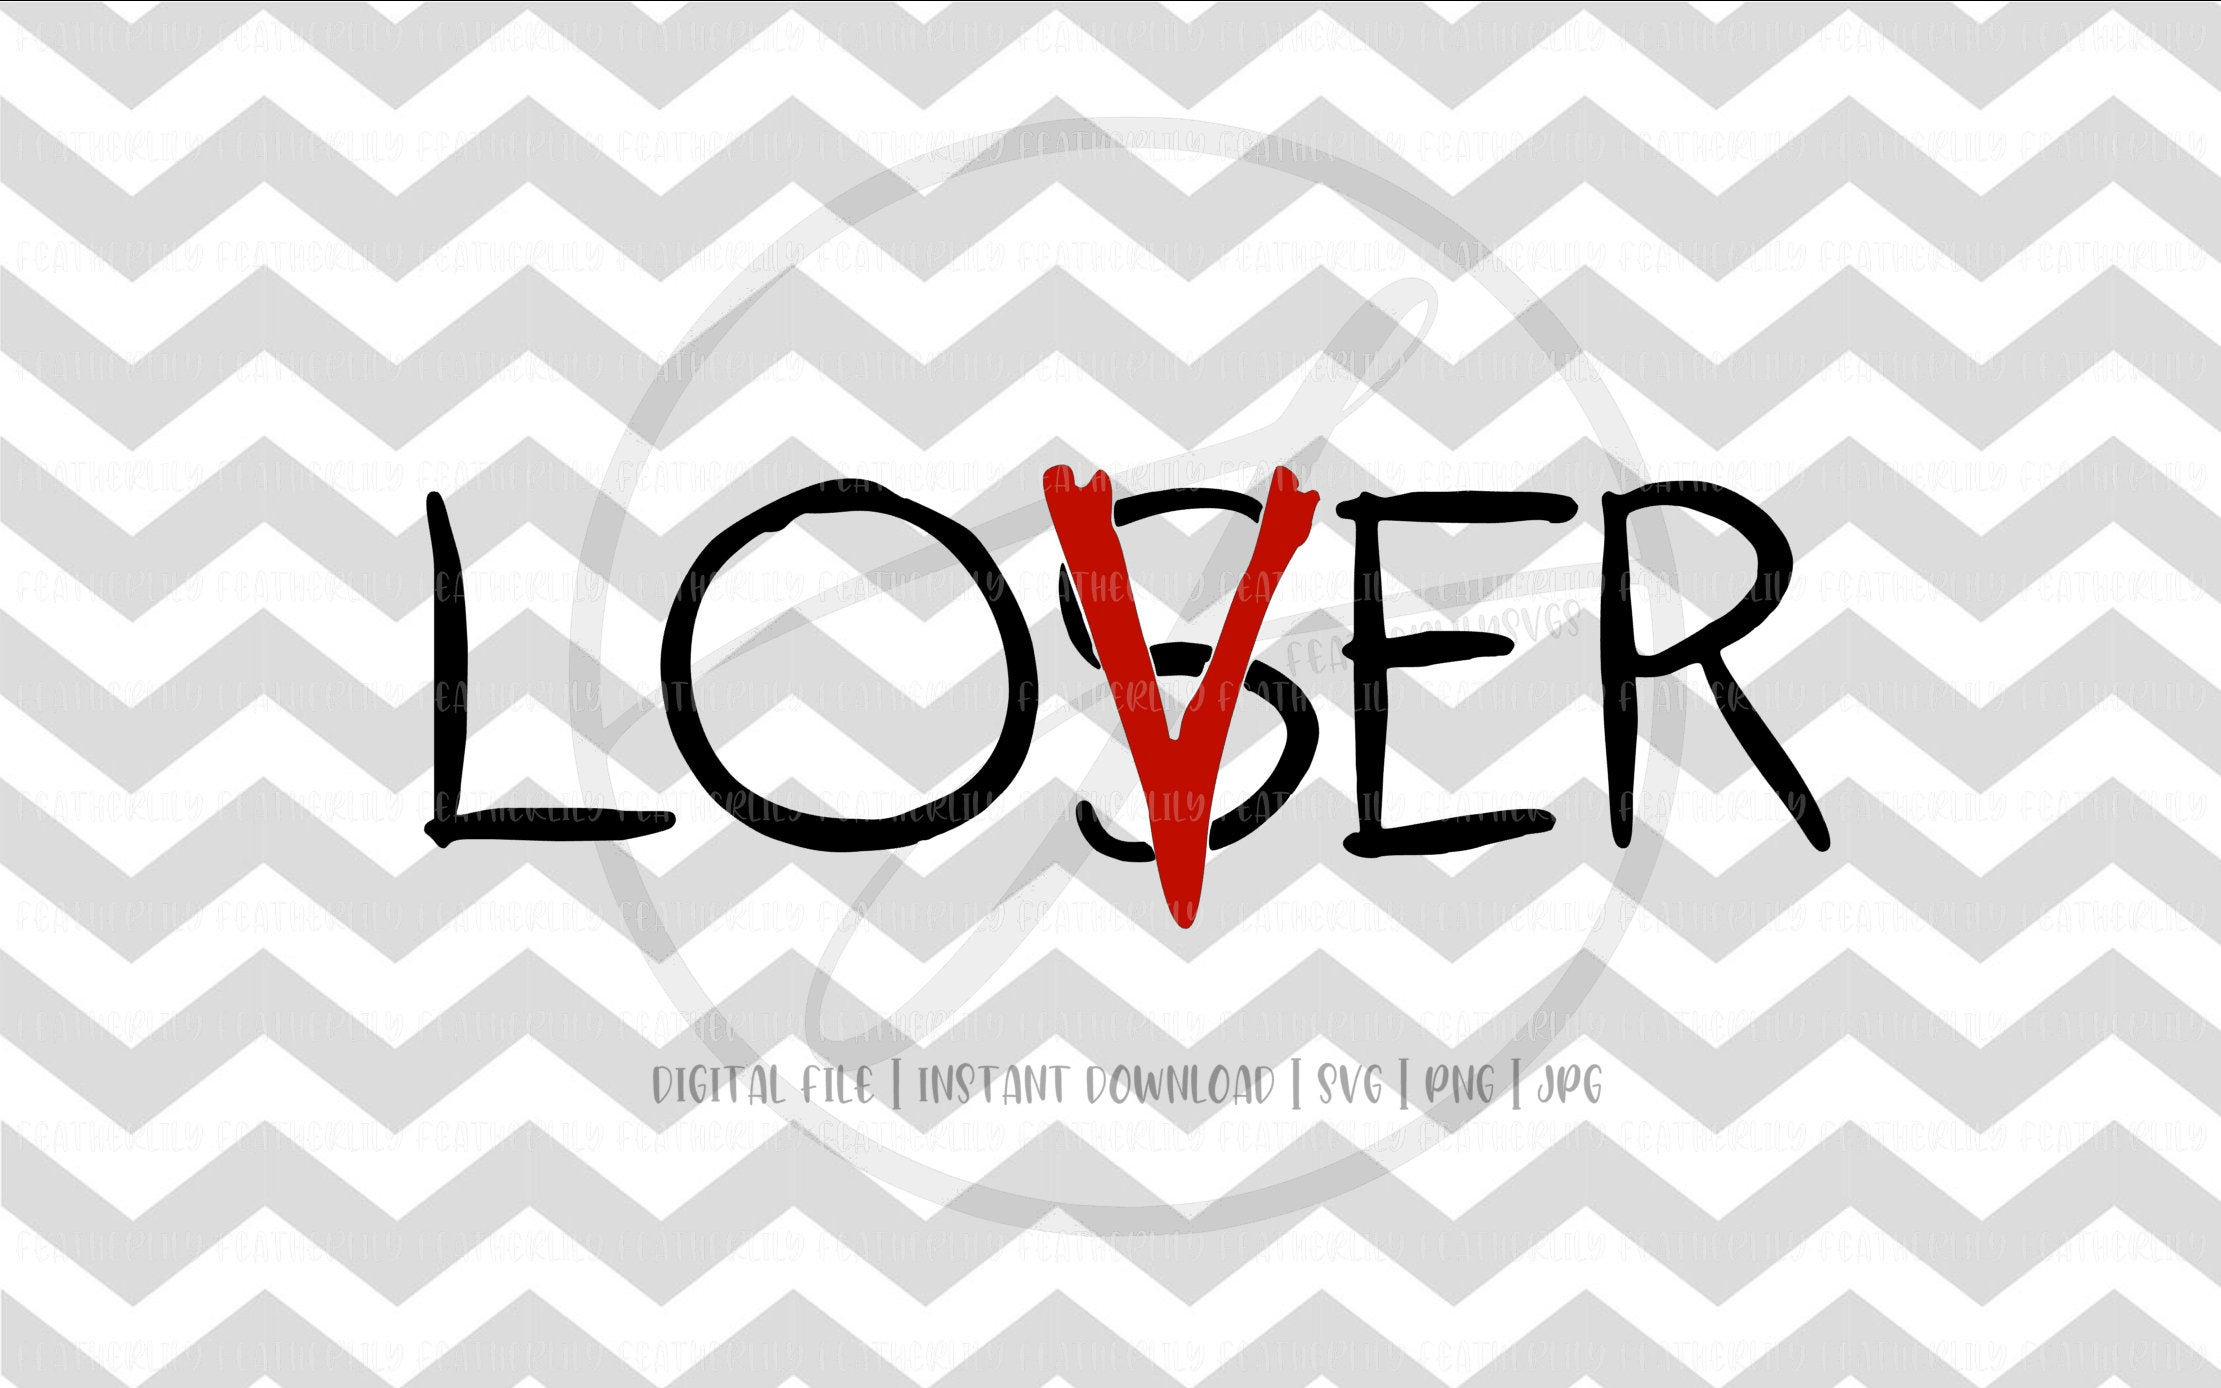 Loser lover it halloween horror derry losers club